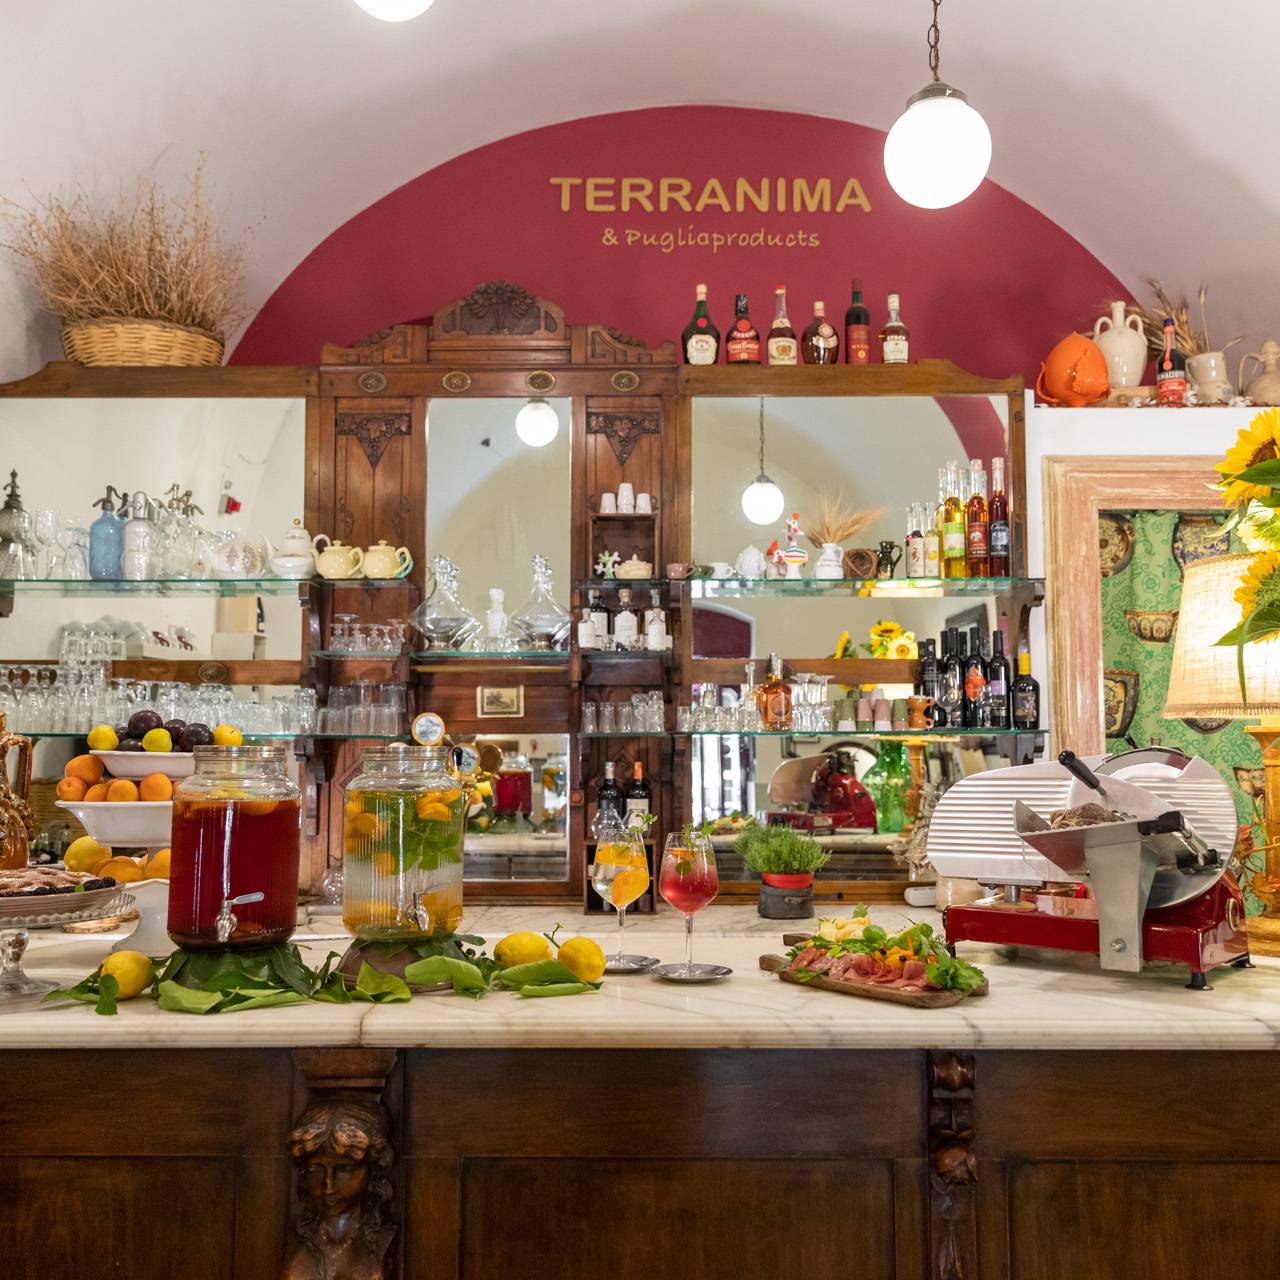 Terranima | Saletta Batafobrle, l'antico bancone del bar